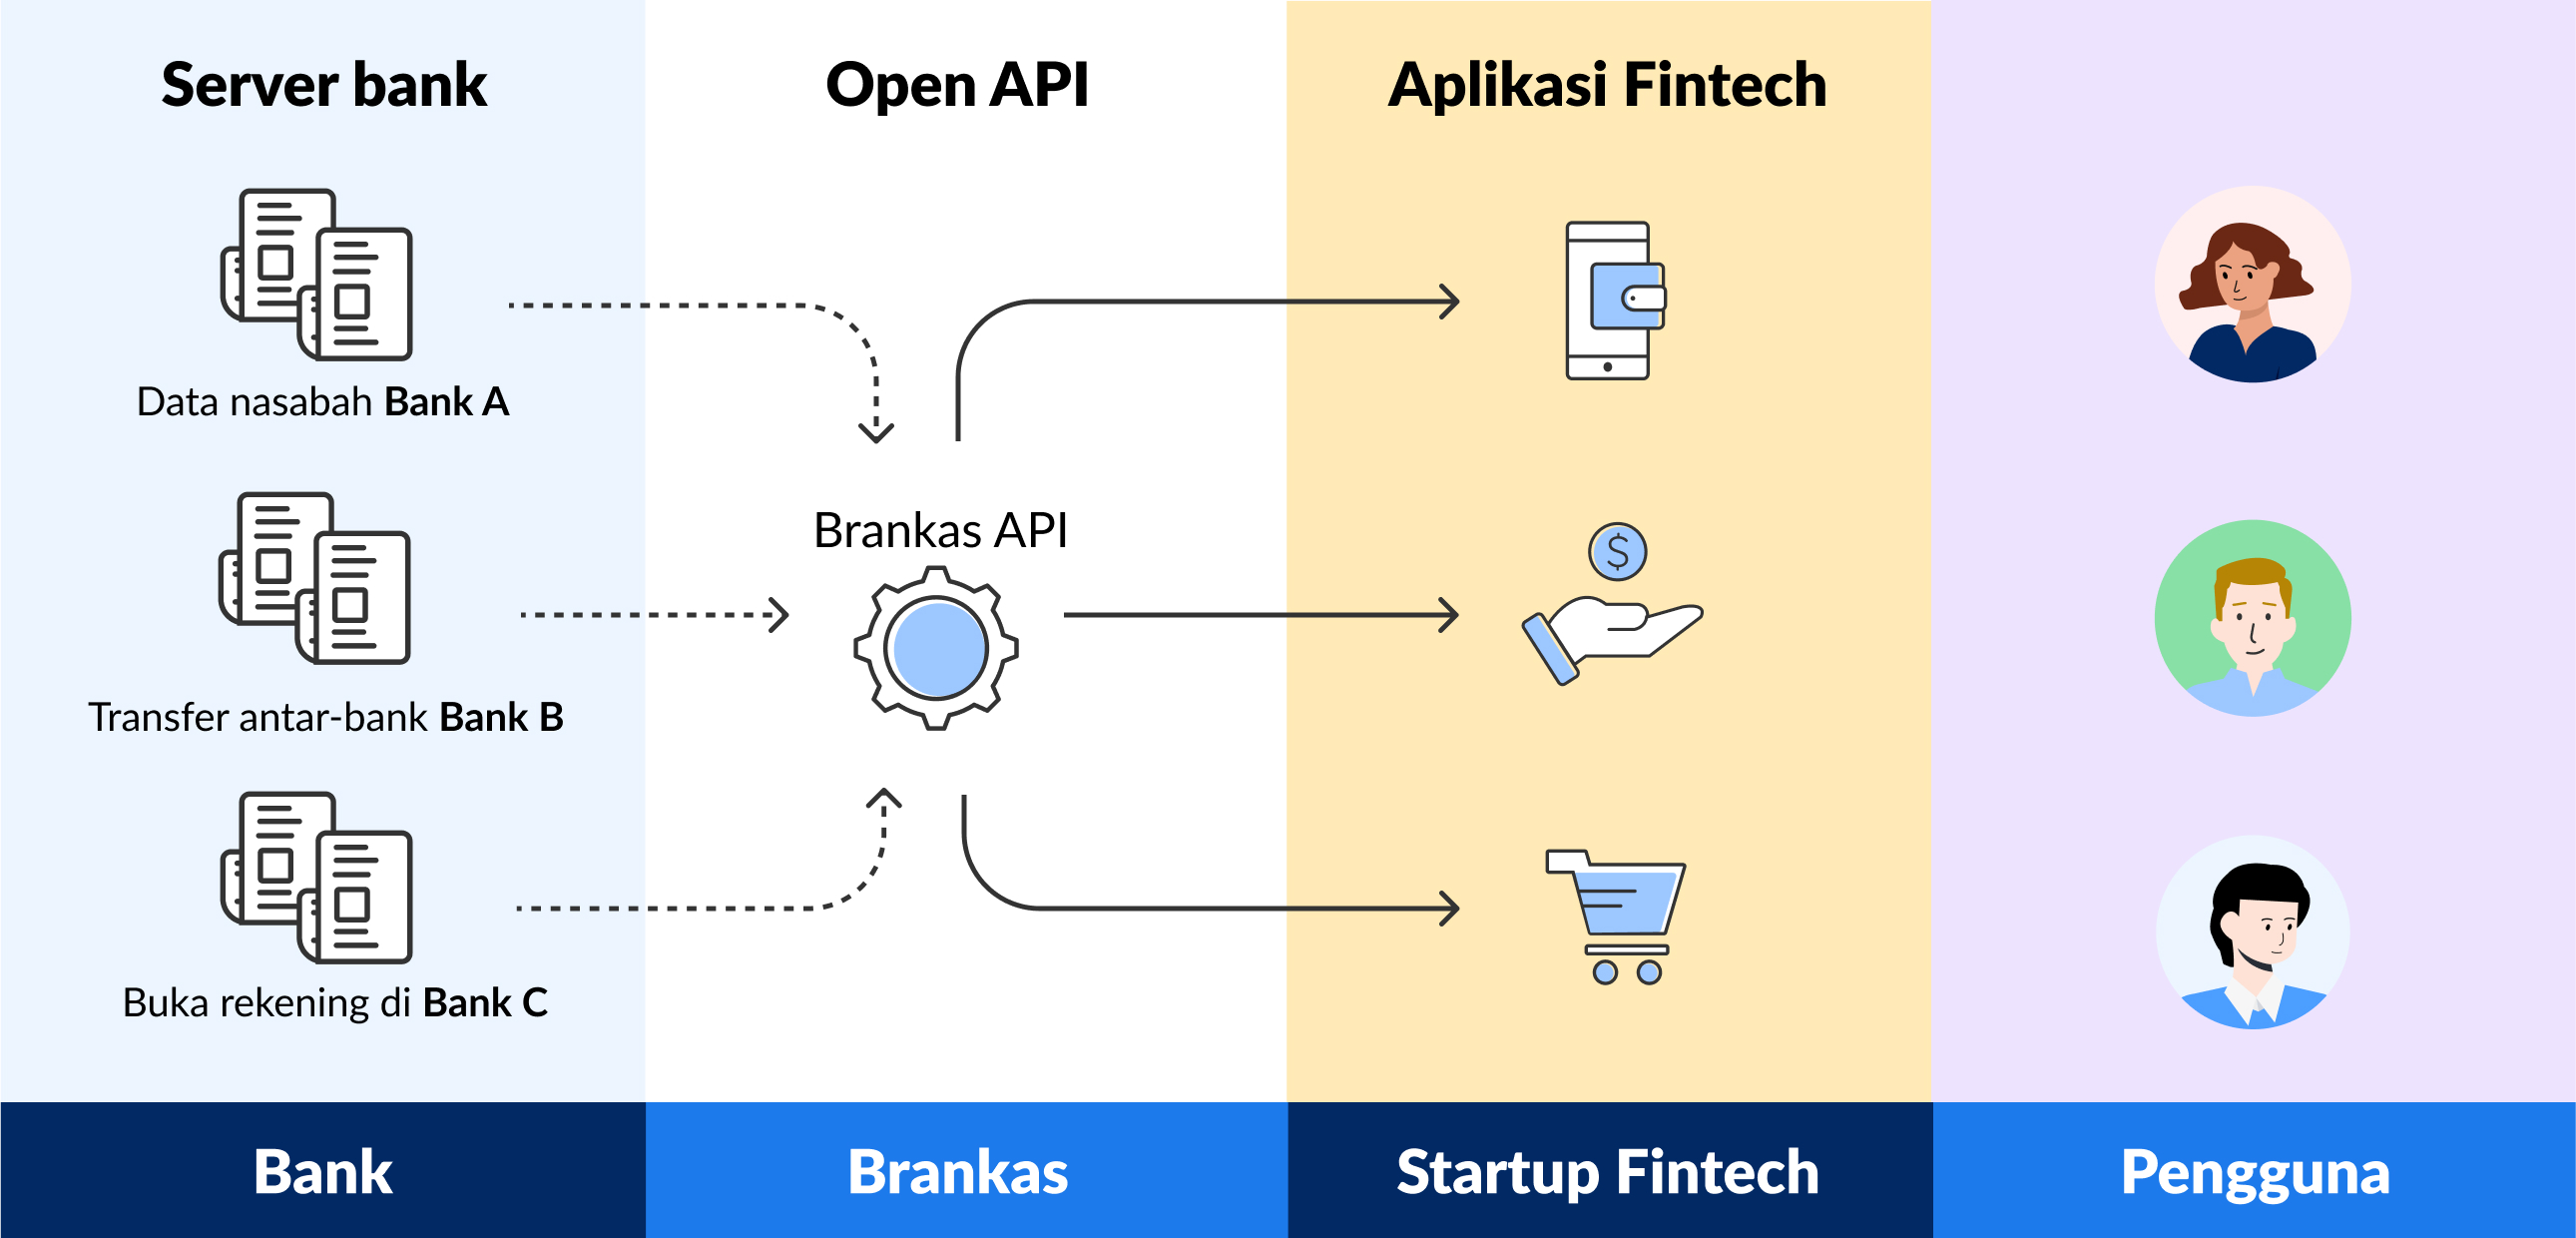 Open API (Application Programming Interface)